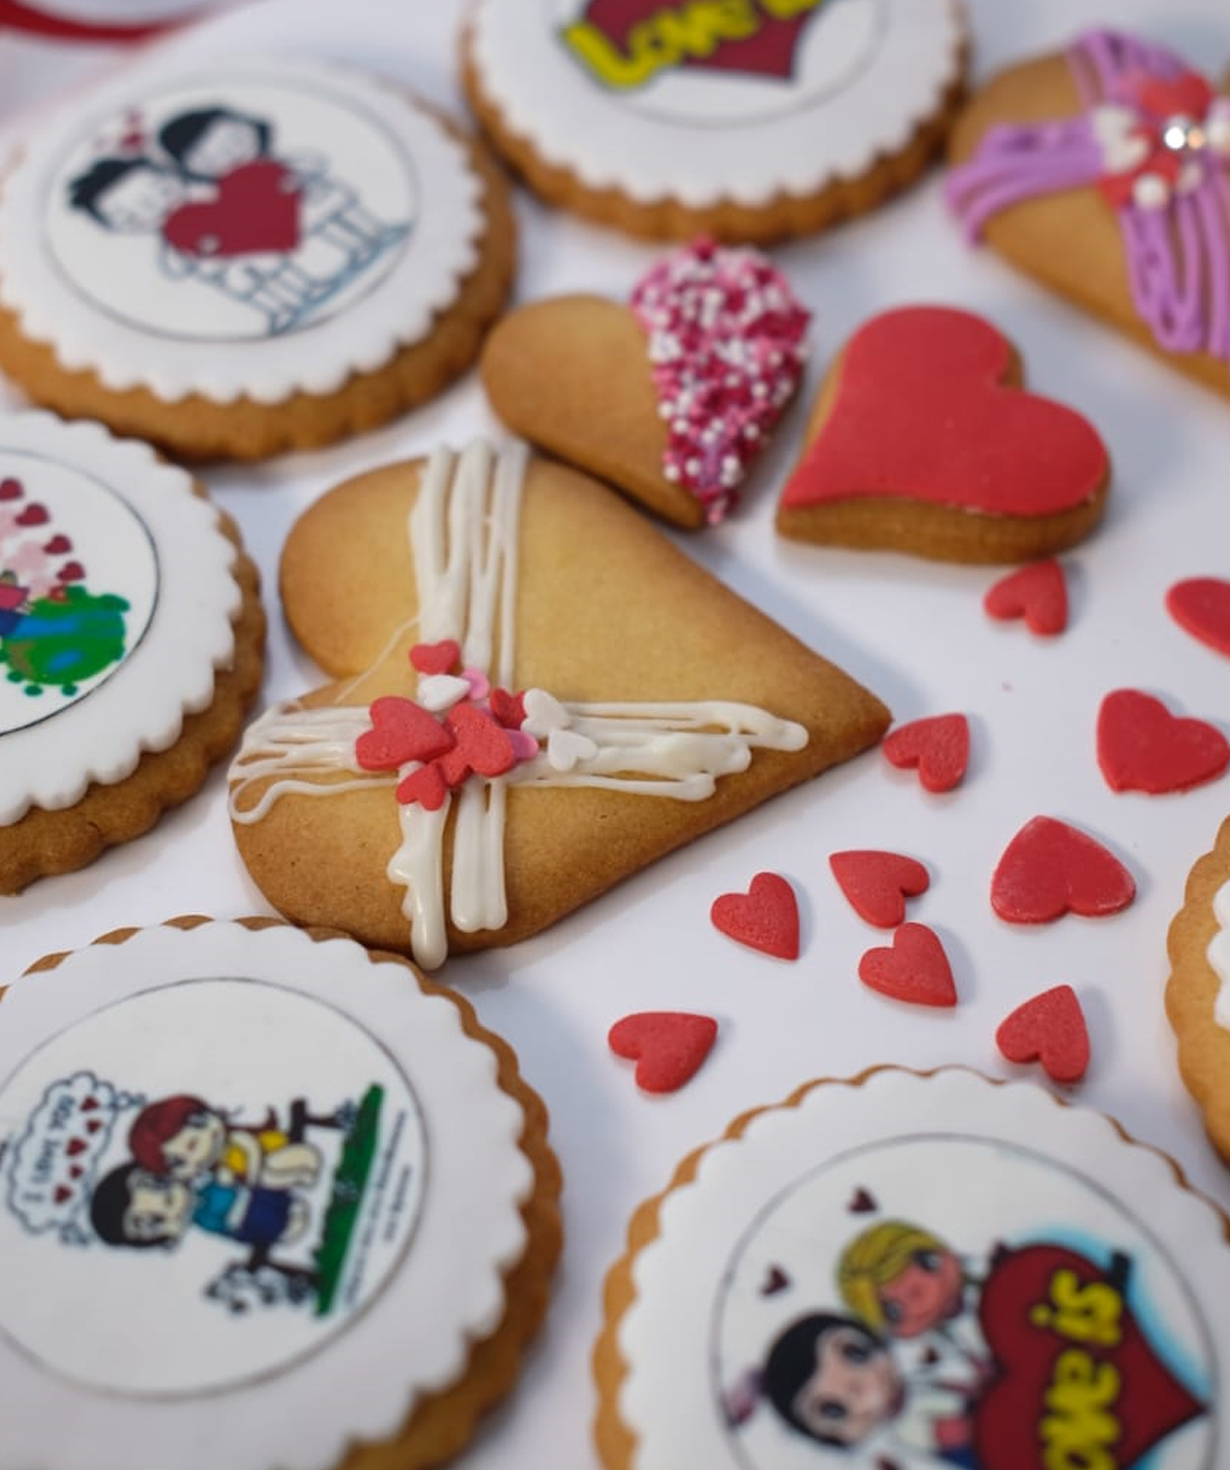 Cookies «Lizzi Cakes» Love is, 5 pcs